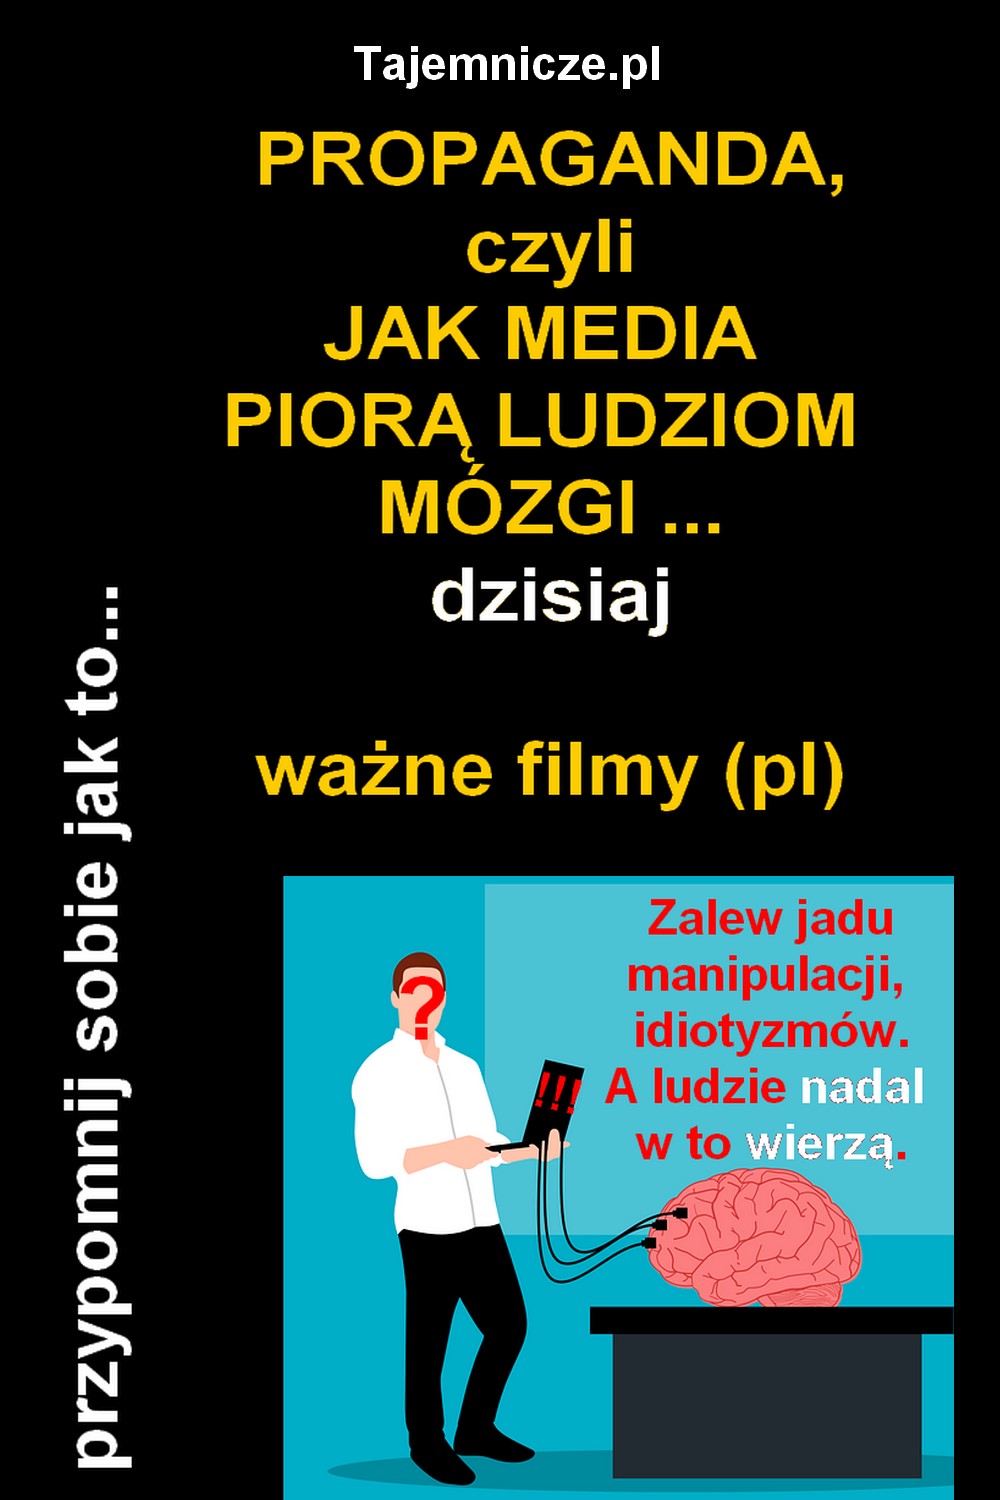 tajemnicze.pl-propaganda-jak-media-piora-mozgi-3-filmy-pl